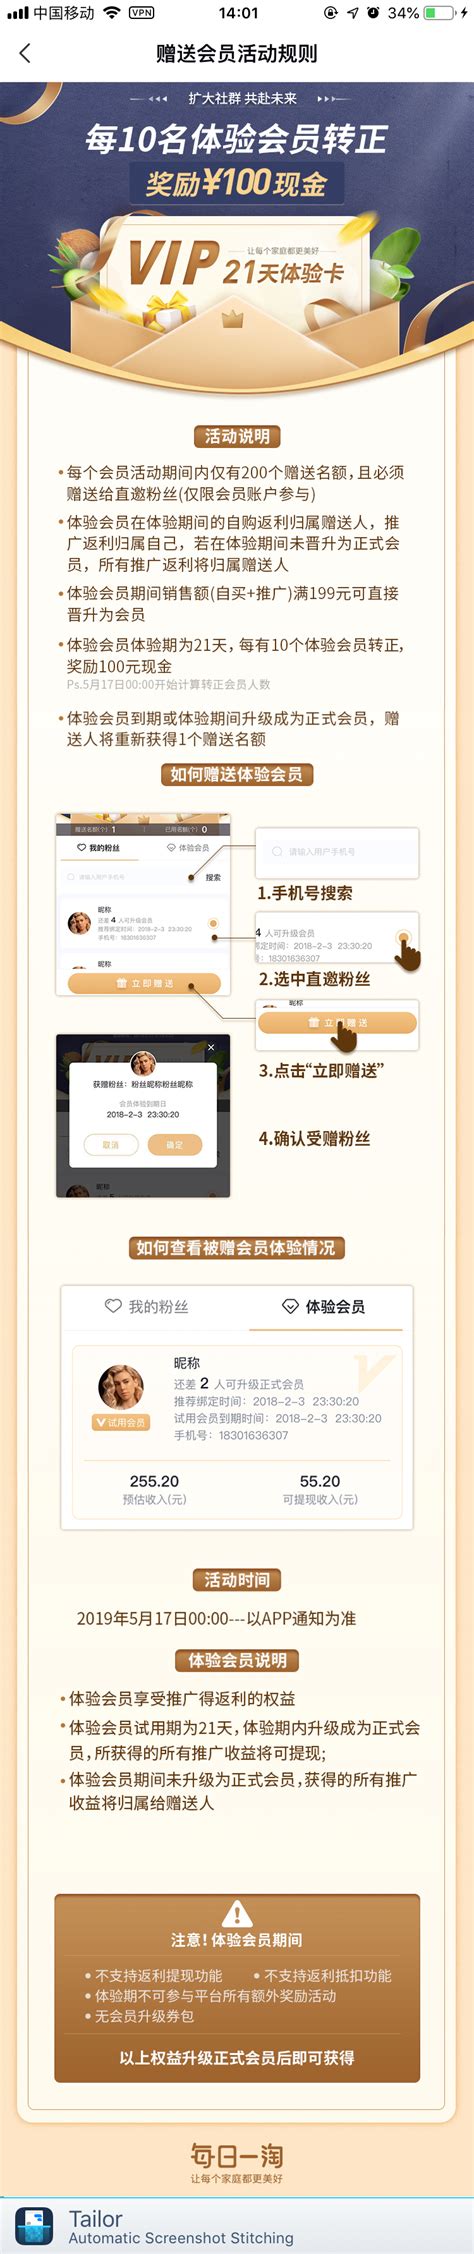 Pin by linda_zi on 返利平台 | Shopping, Shopping screenshot, 90